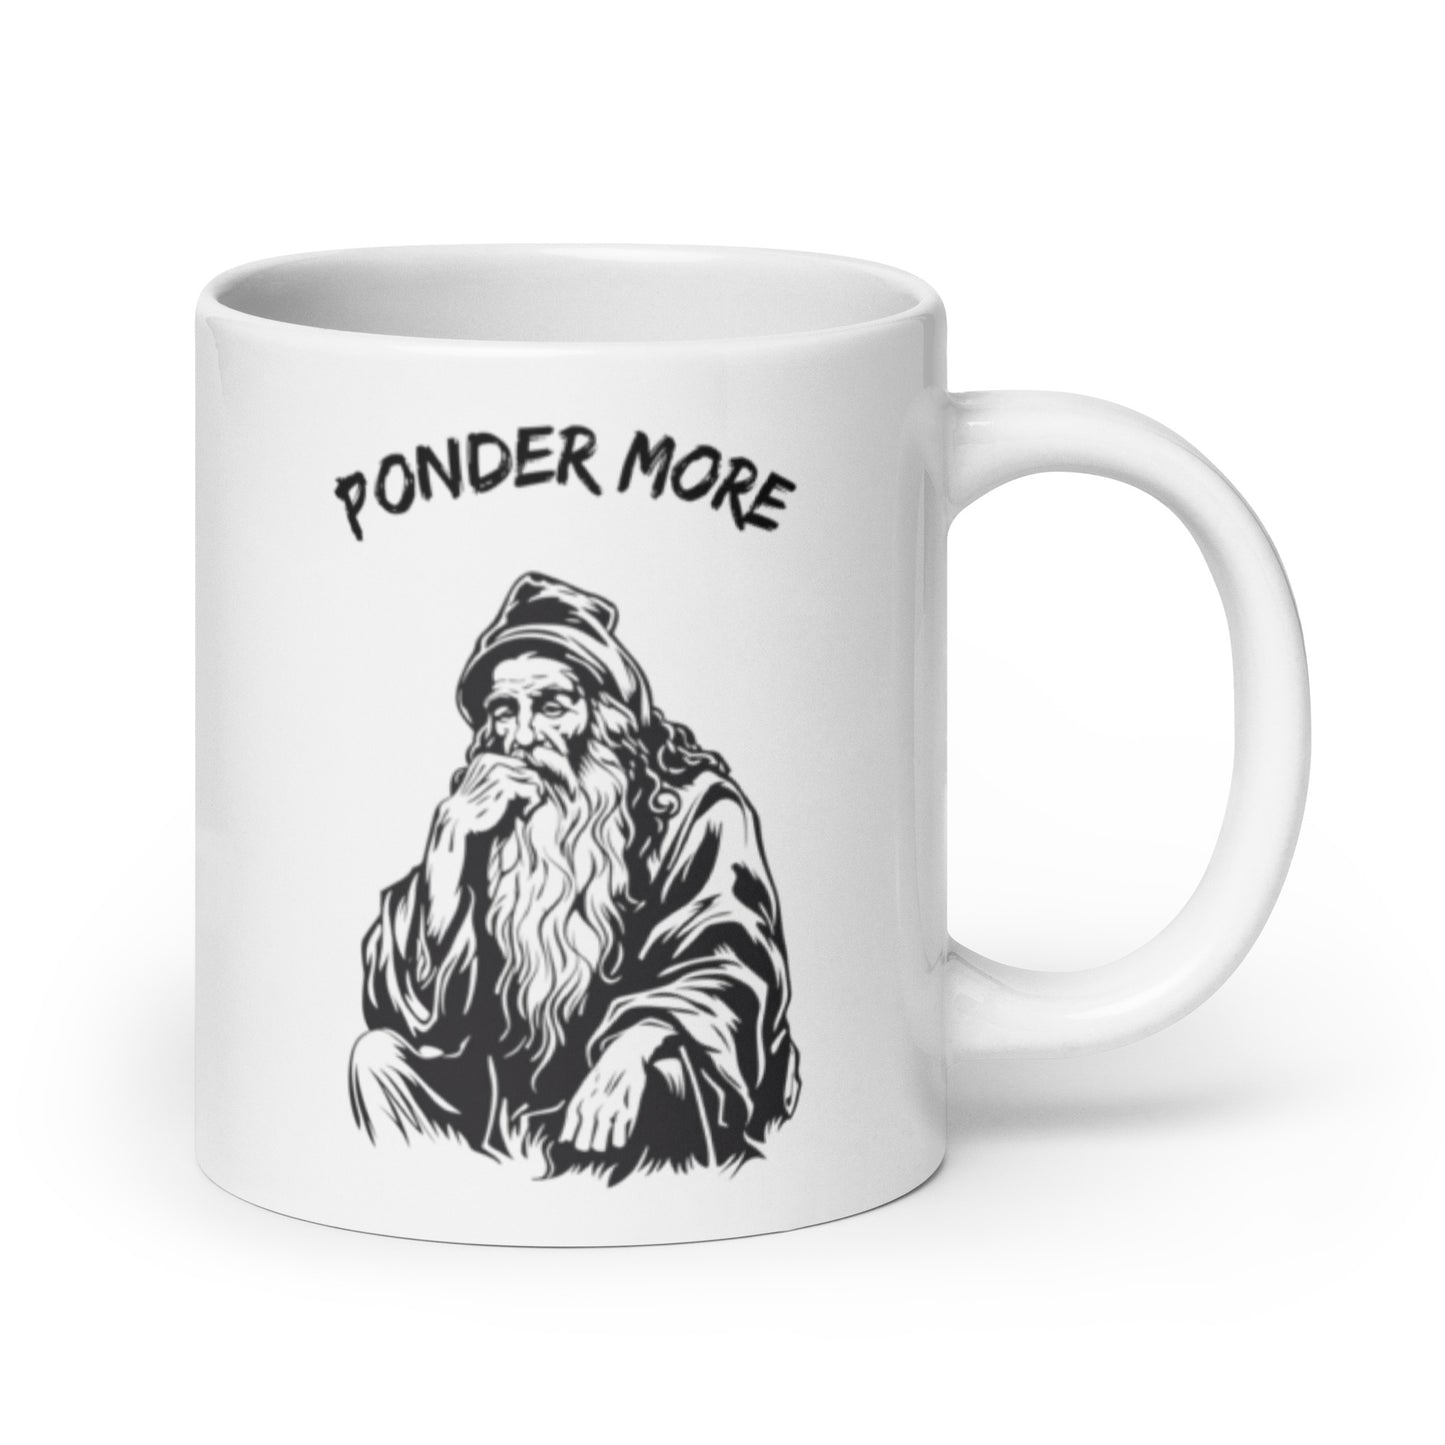 Ponder More, Wizard Mug